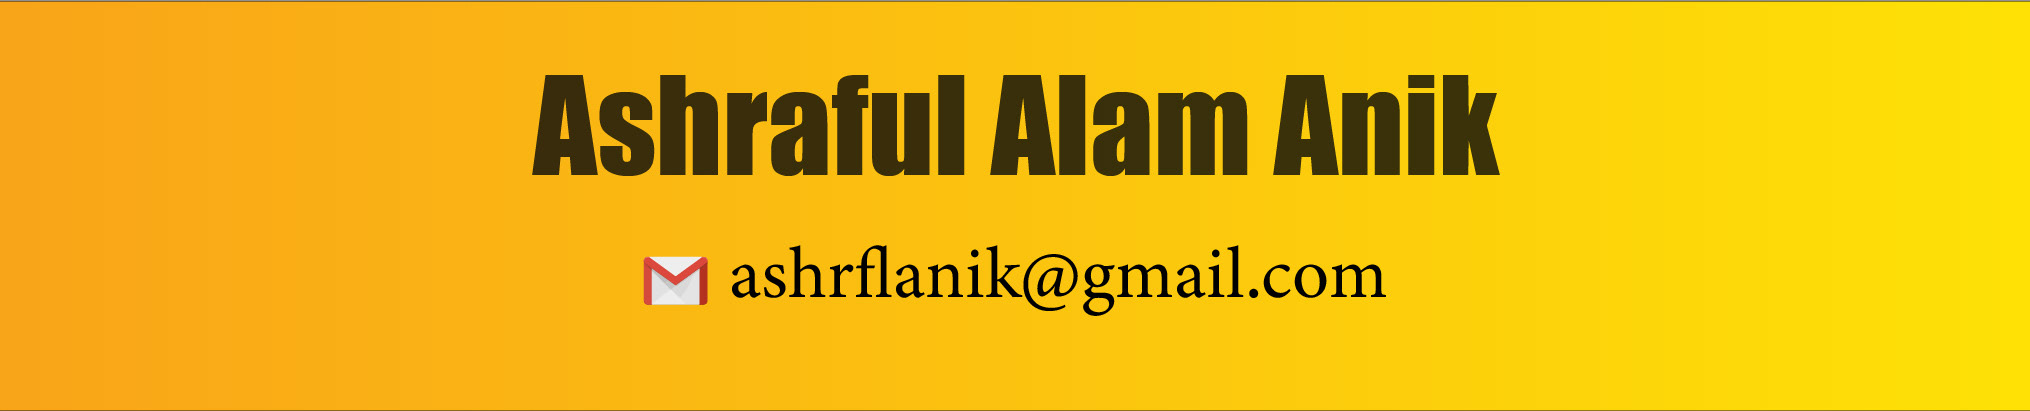 Ashraful Alam Anik's profile banner